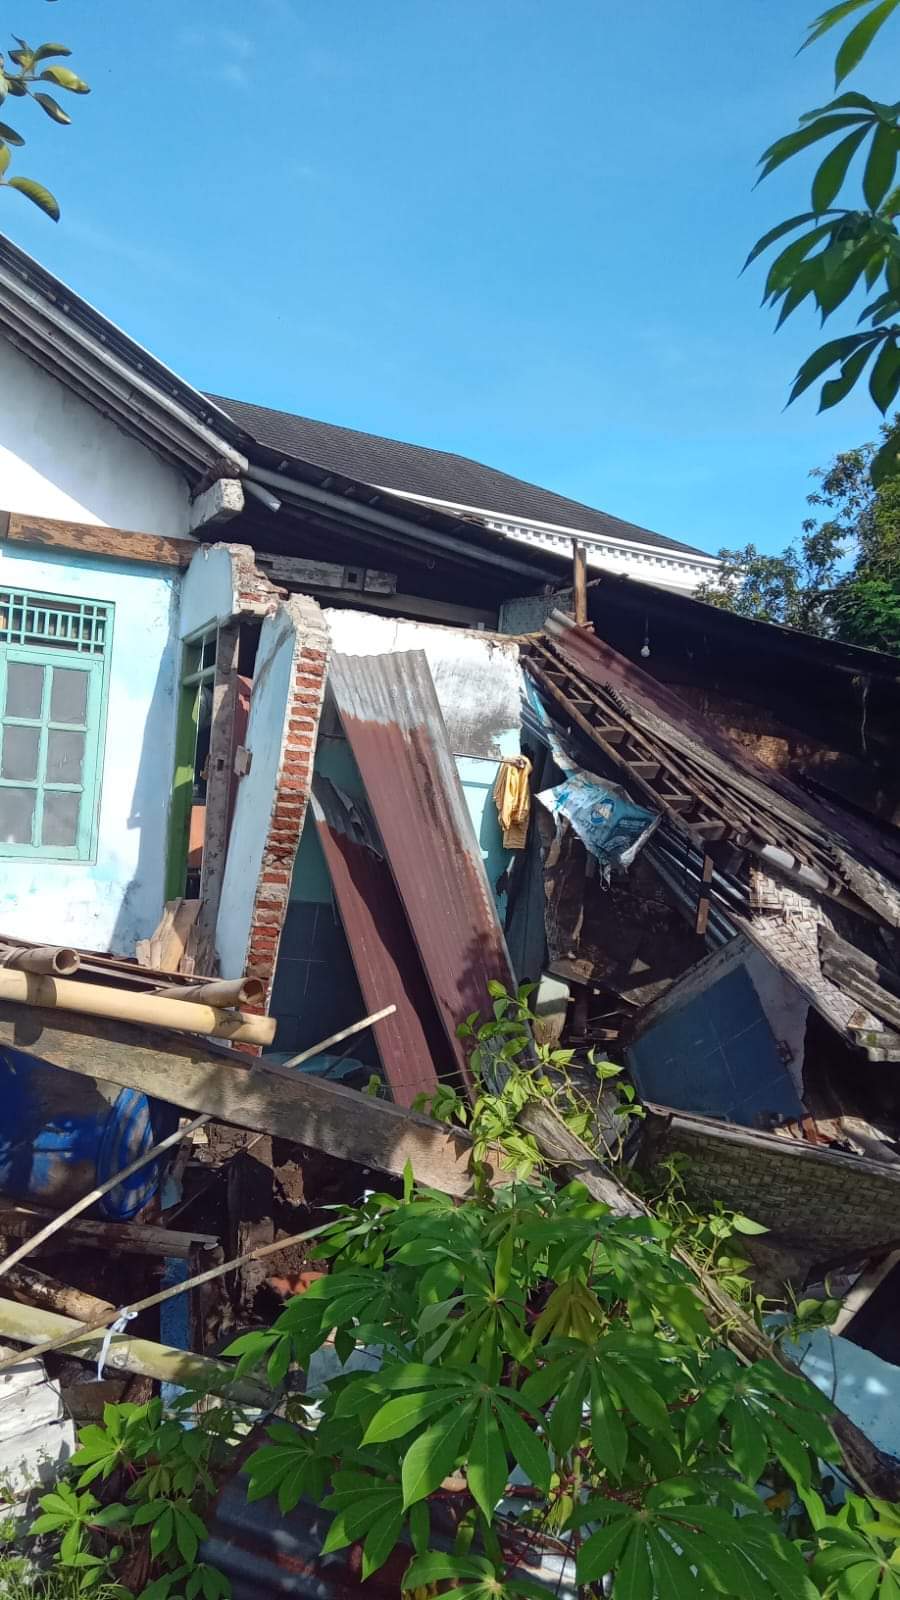 Rumah Warga di Kotayasa Sumbang Roboh Tergerus Air Selokan, 1 Orang Penghuni Rumah Luka Tertimpa Bangunan